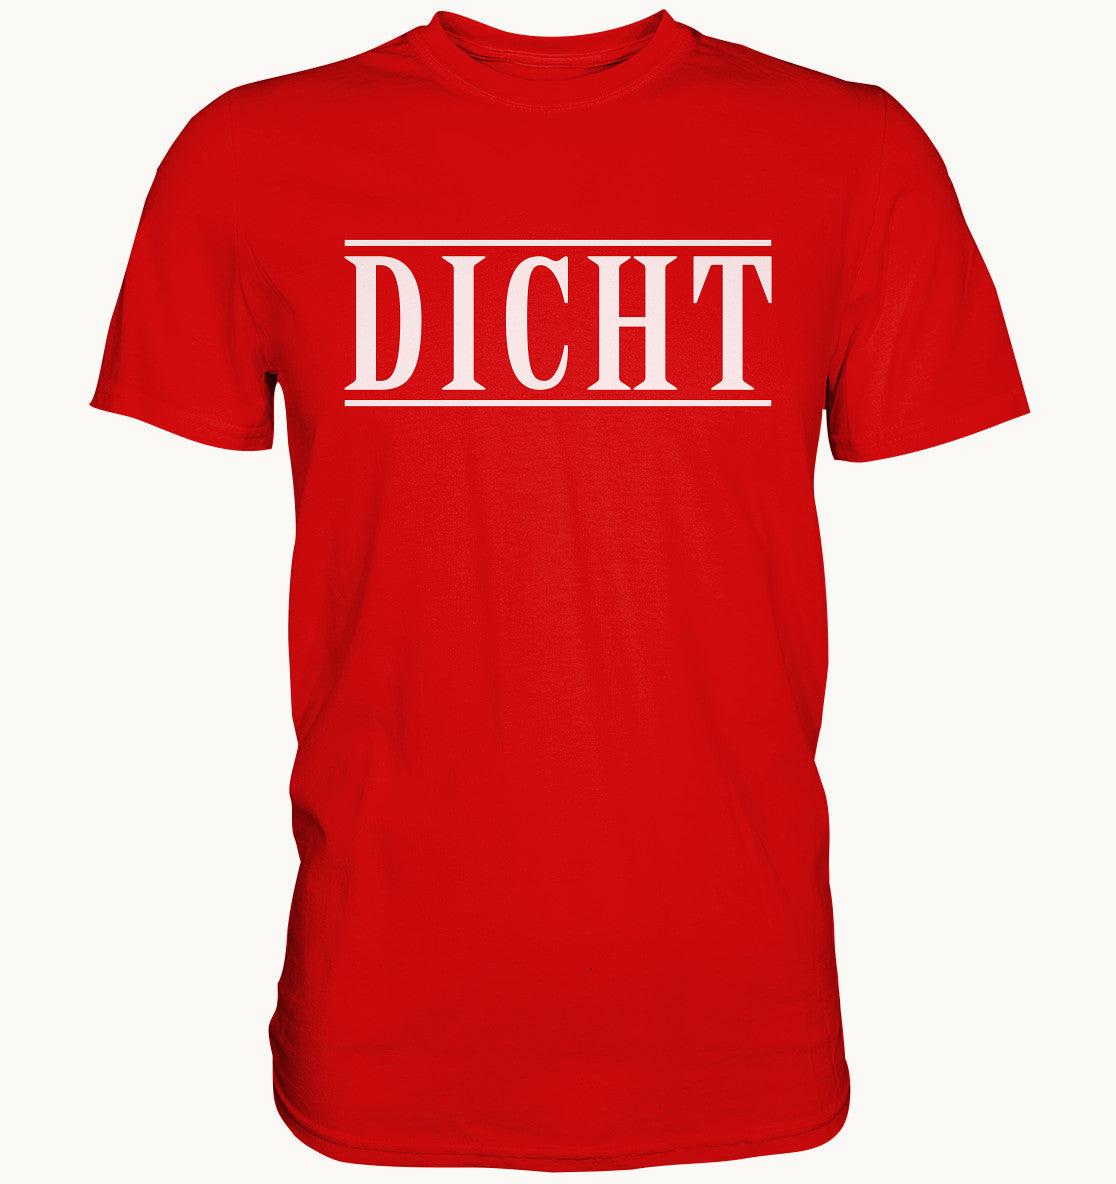 DICHT - Lustiges Partner Shirt - Baufun Shop